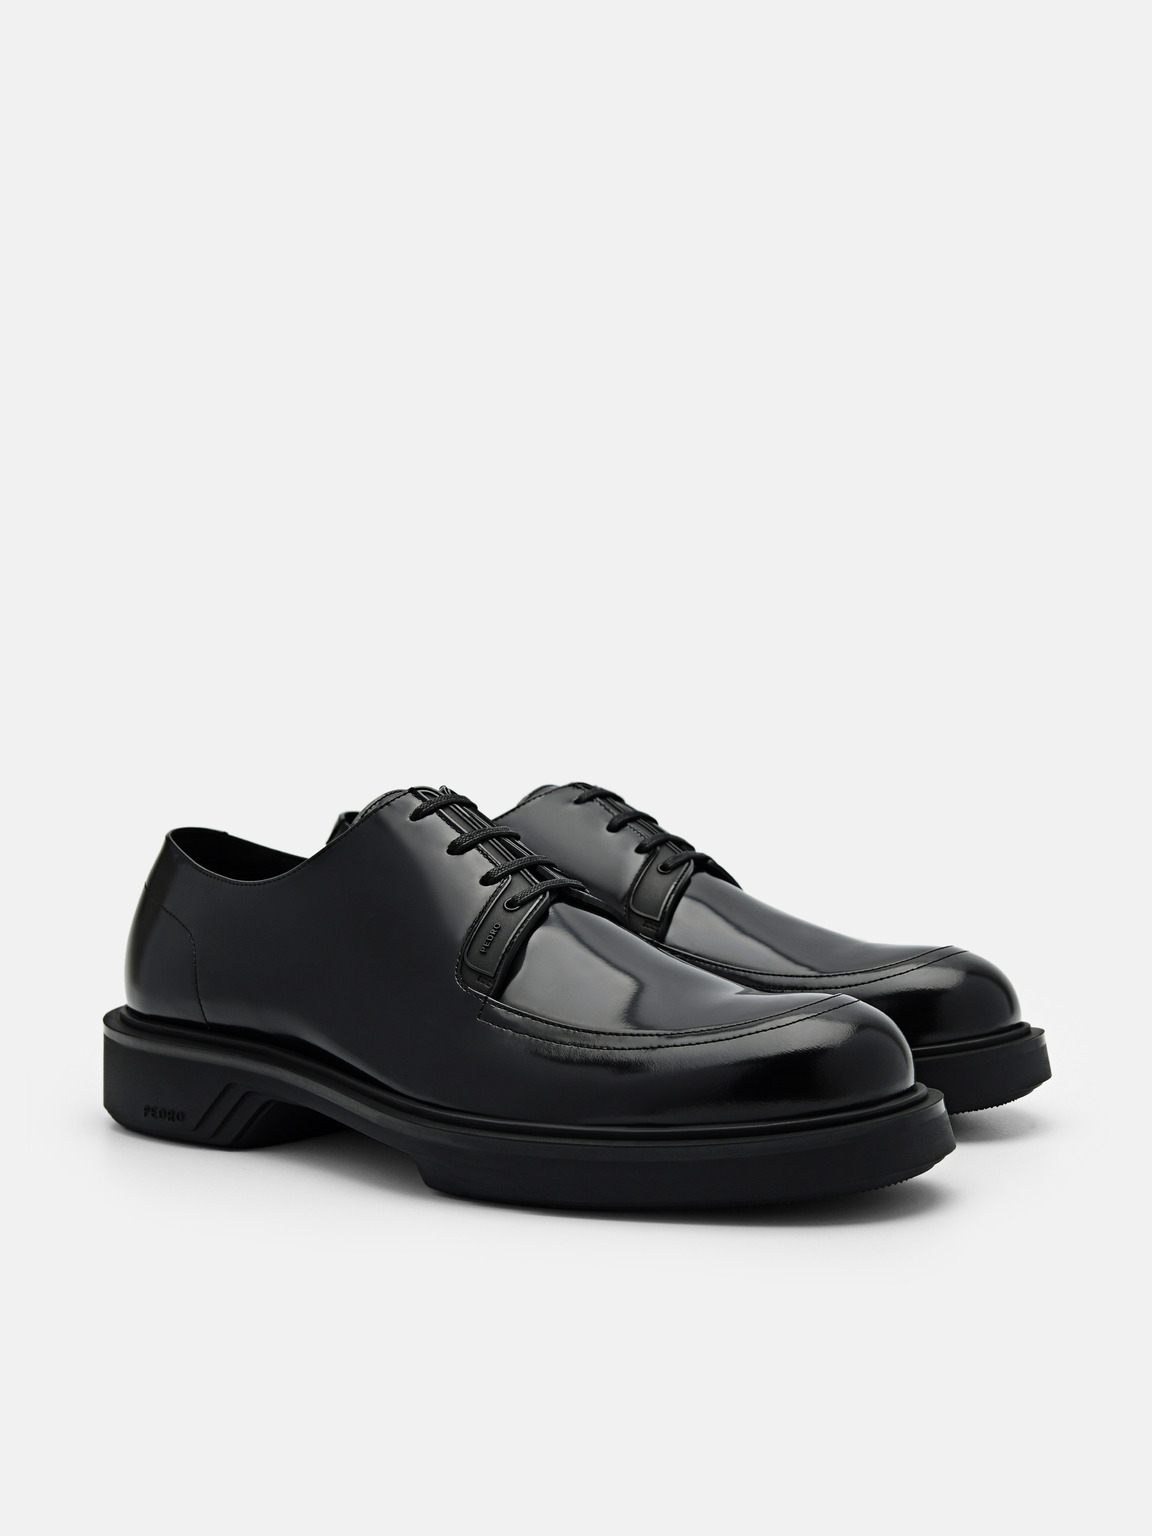 Loop Leather Derby Shoes, Black